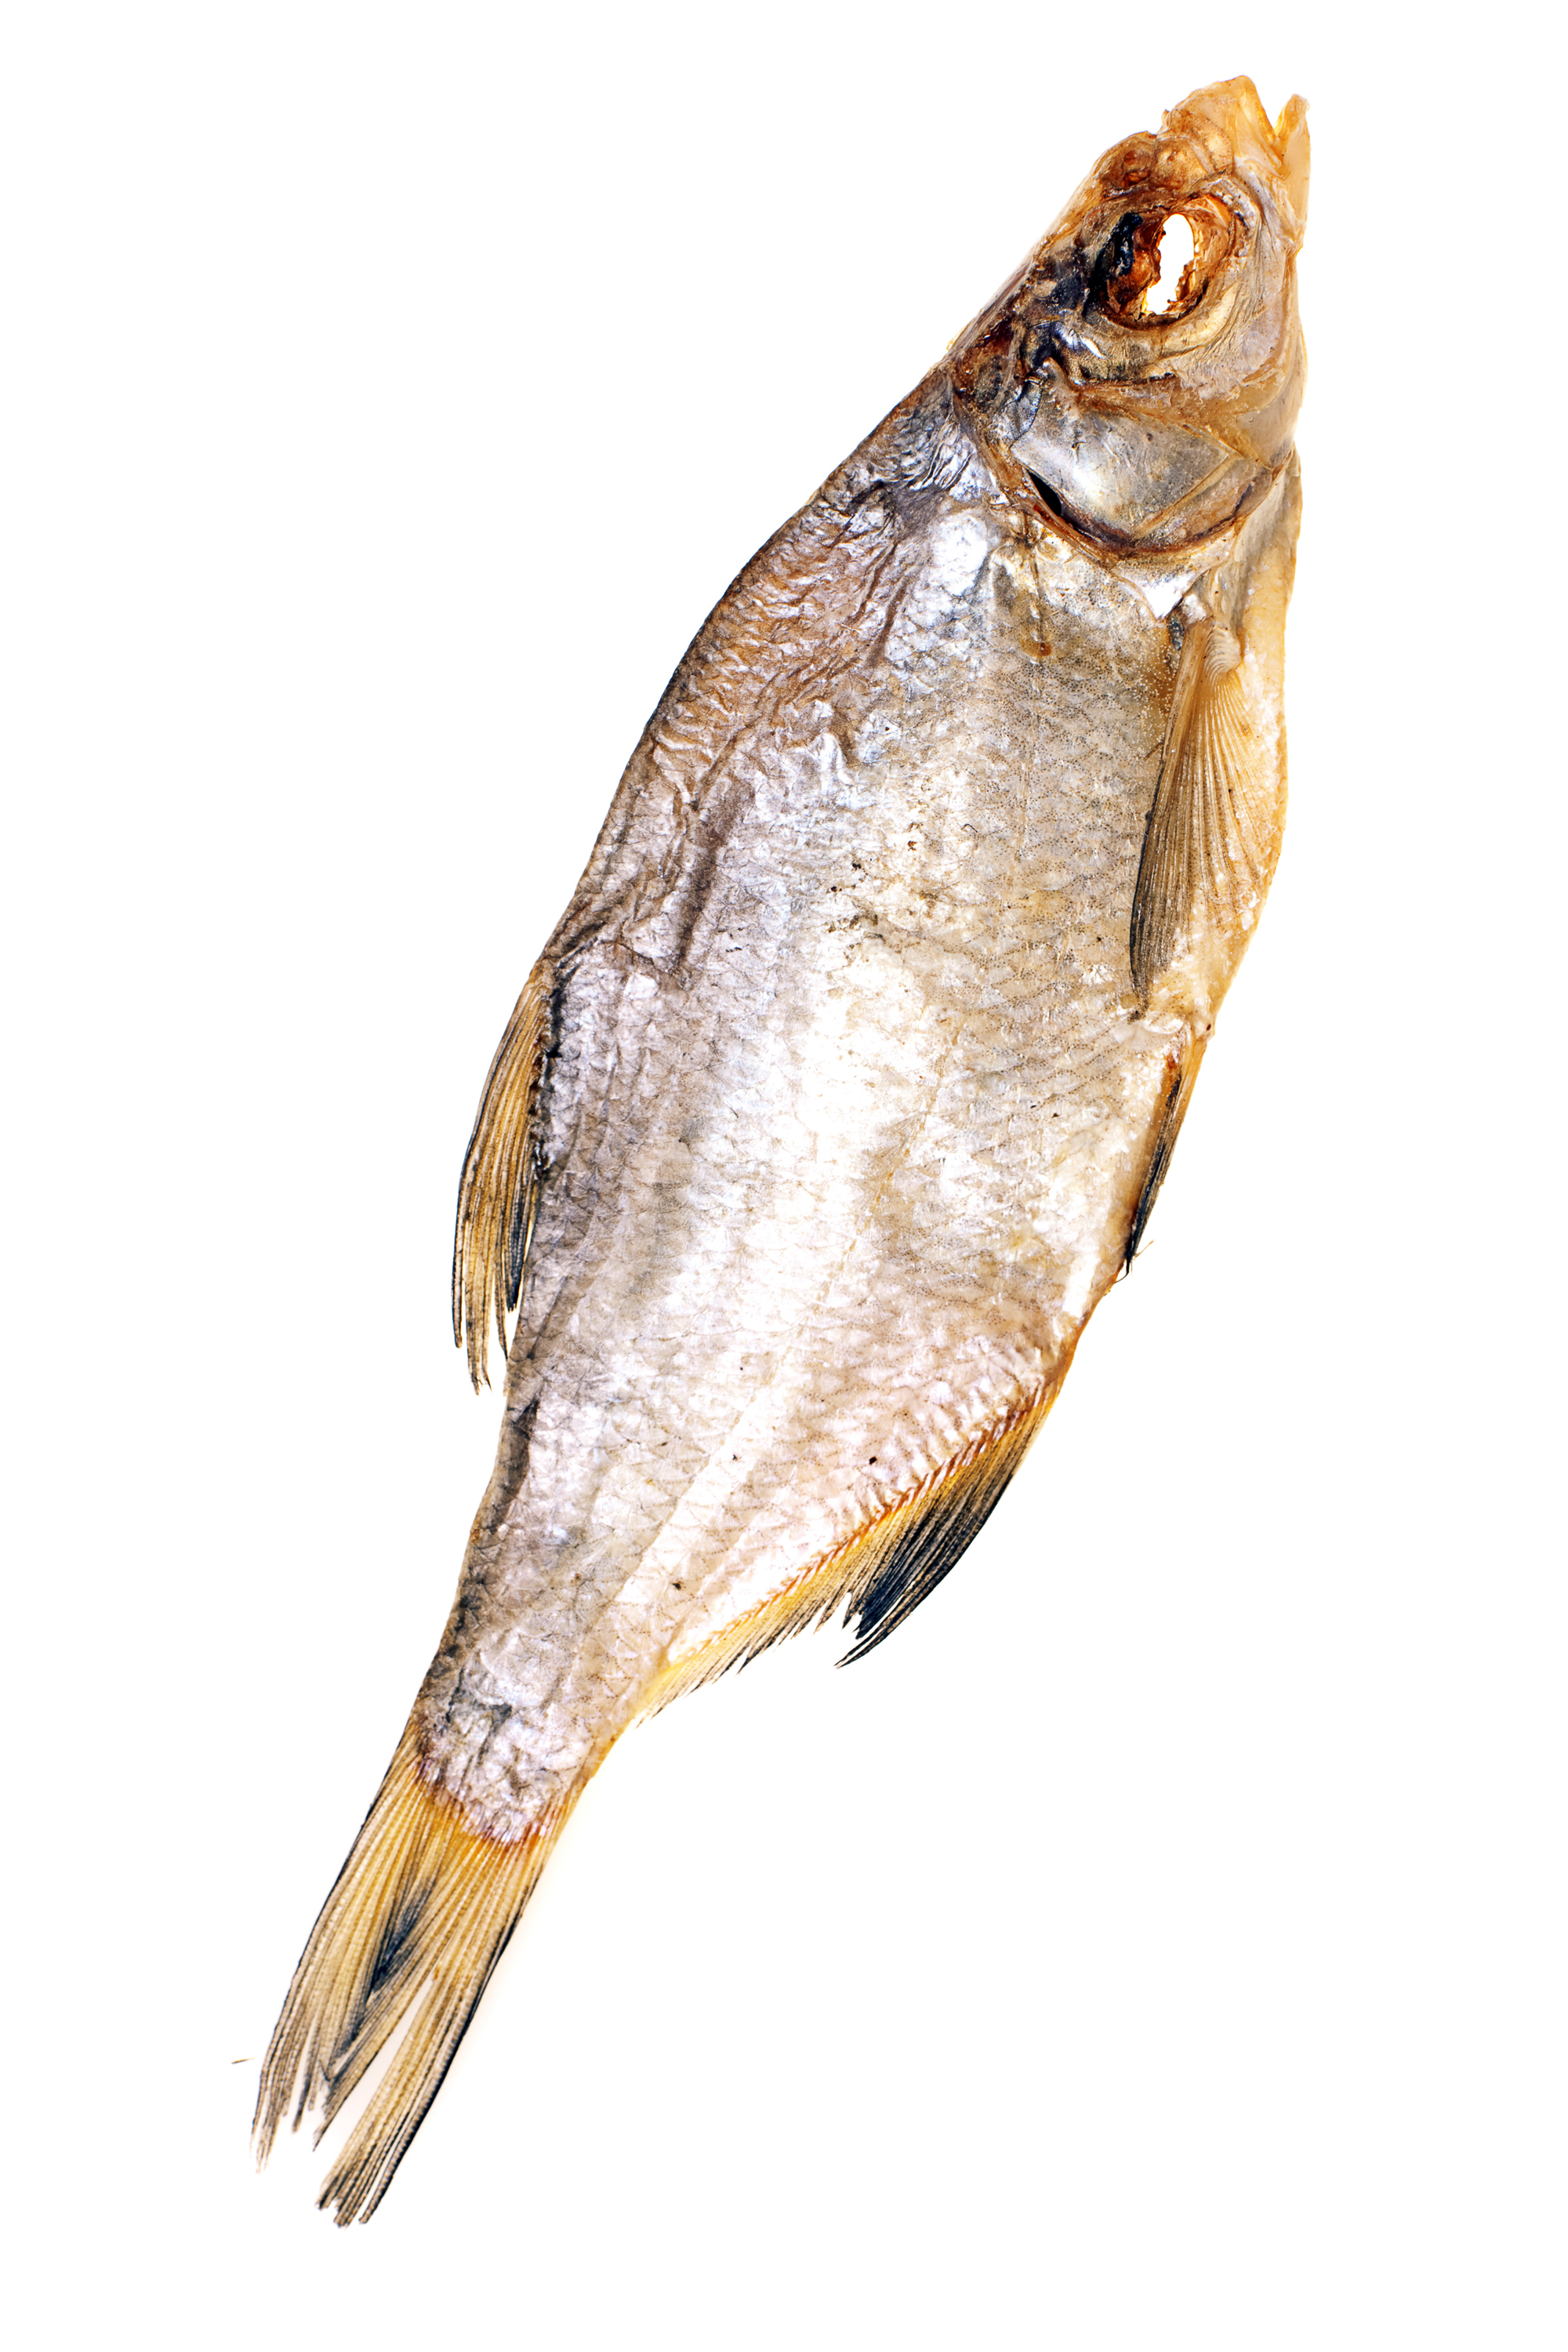 Dried fish photo